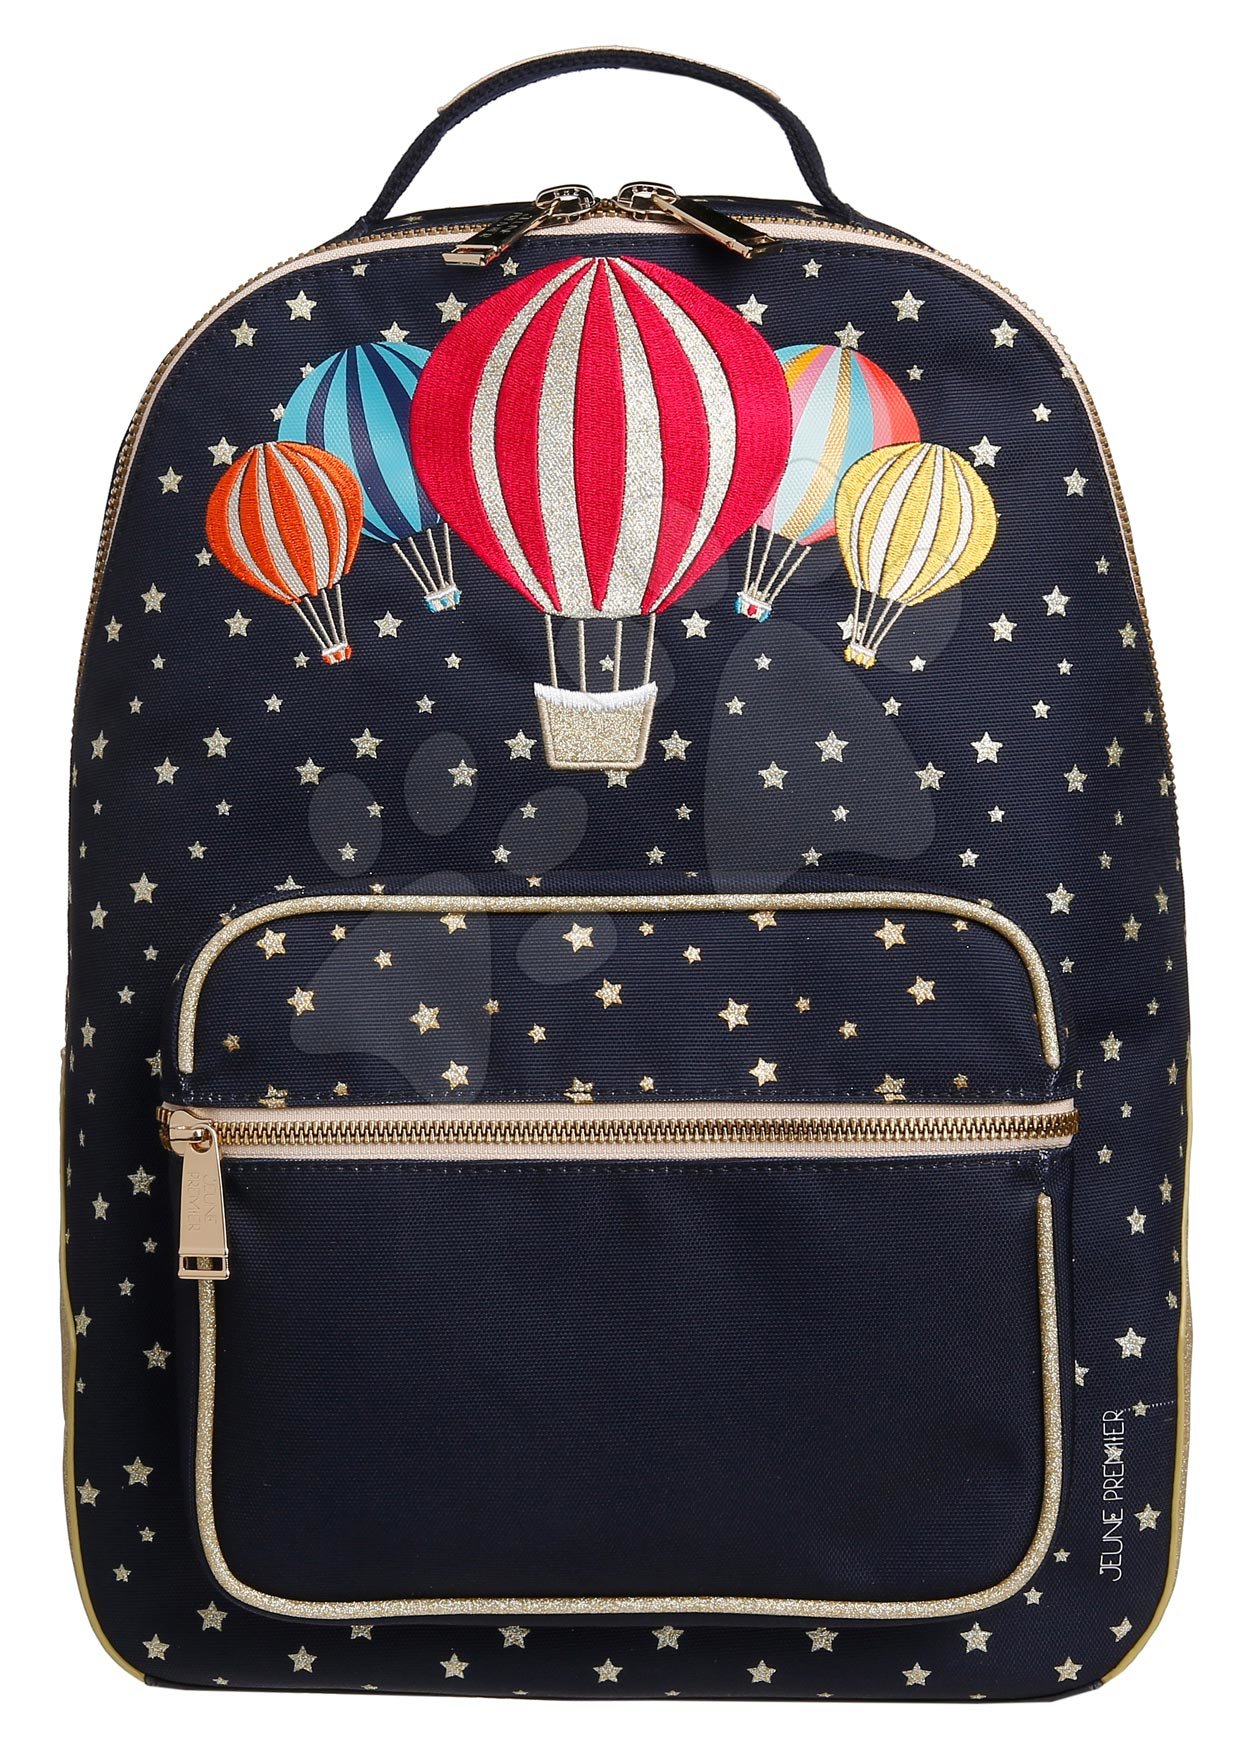 Školské tašky a batohy - Školská taška batoh Backpack Bobbie Balloons Jeune Premier ergonomický luxusné prevedenie 41*30 cm